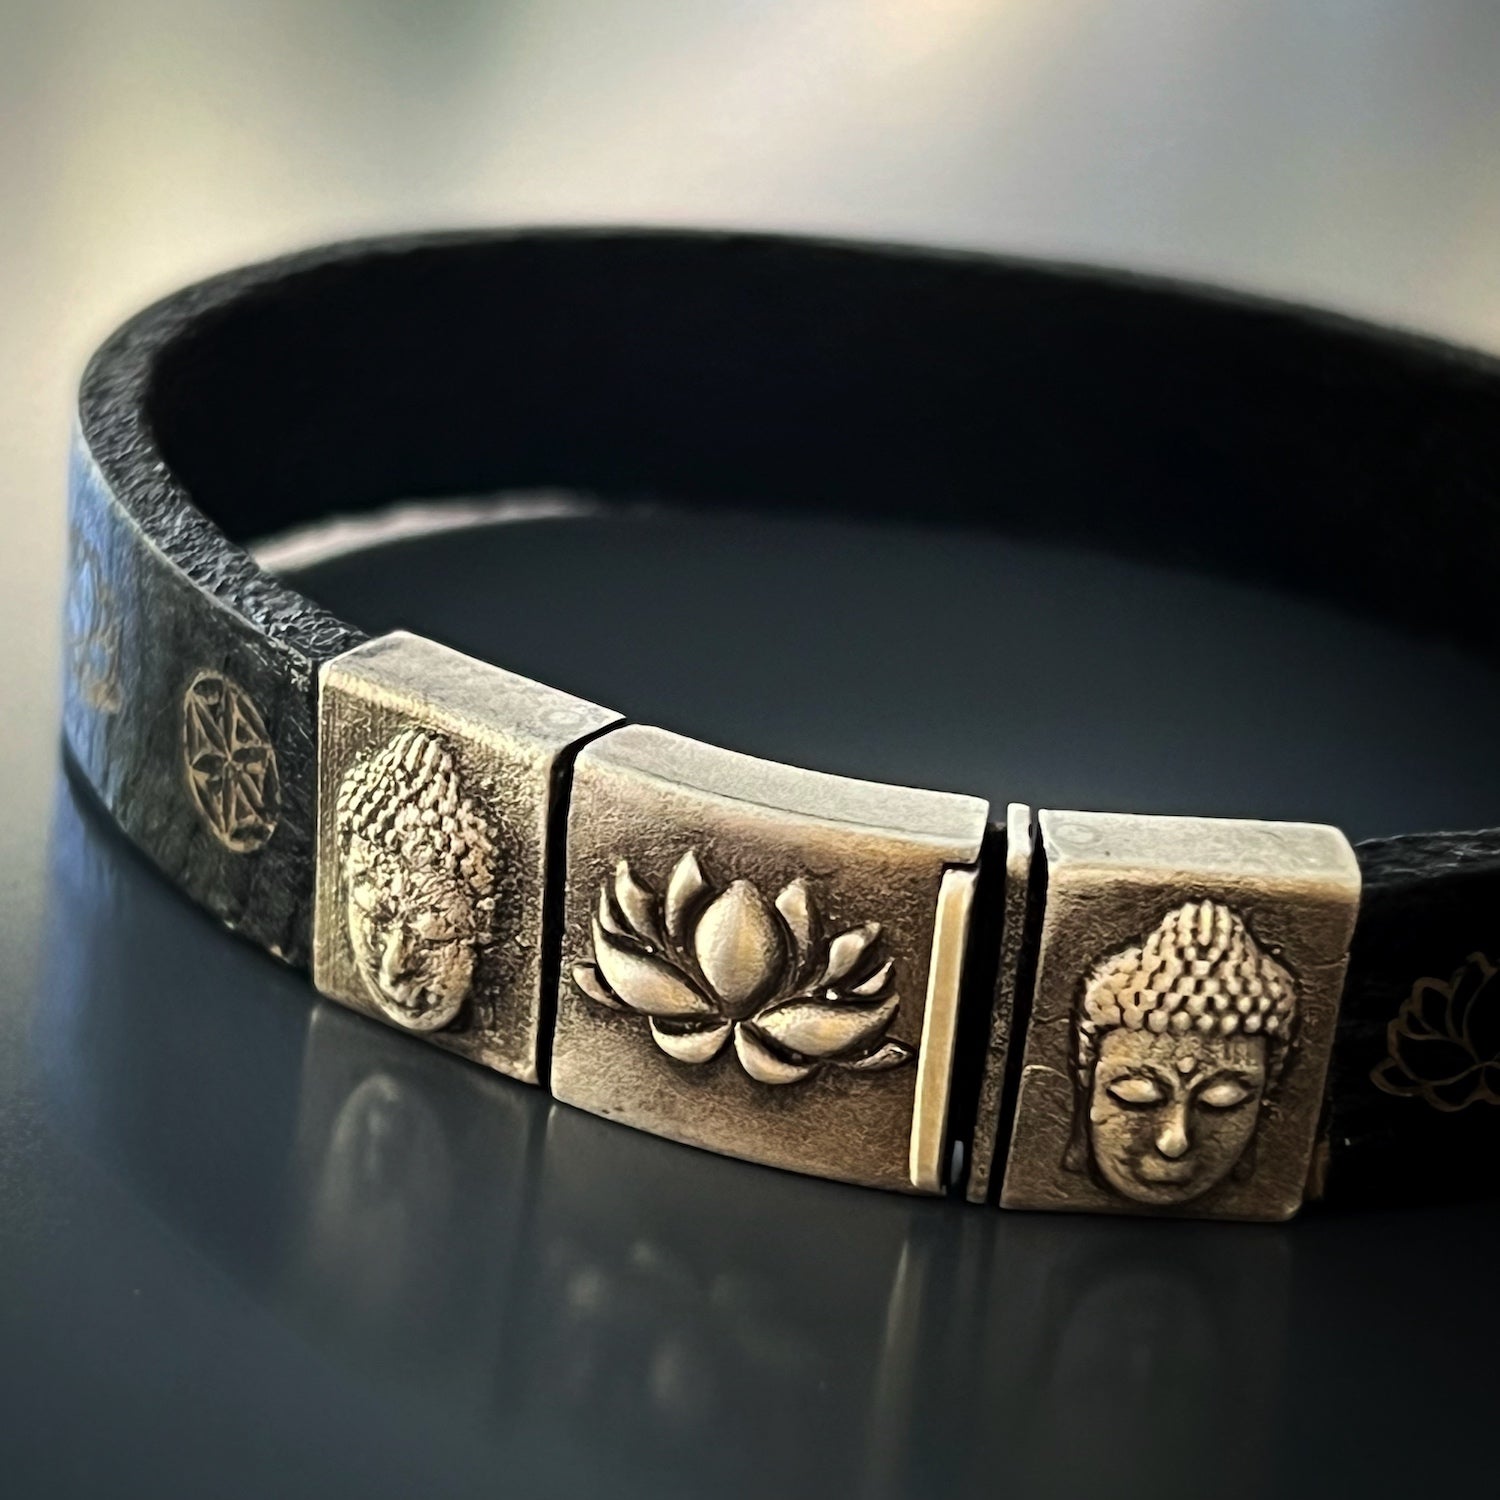 Unique Bangle Design - Spiritual Buddha and Lotus Bracelet with laser-engraved leather.